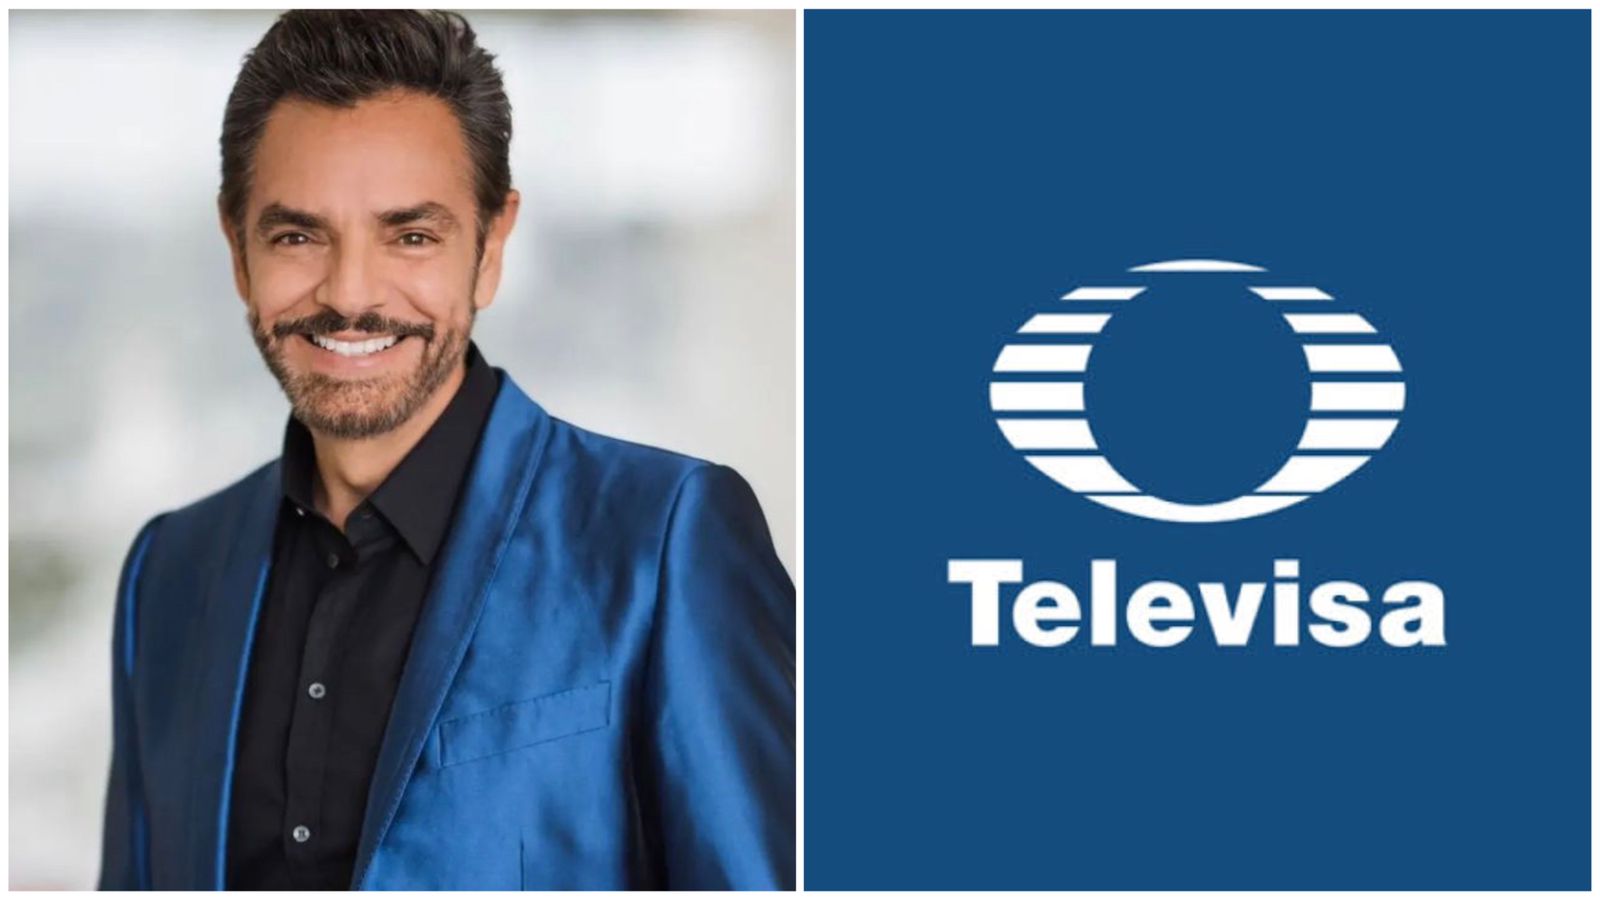 The actor confessed that Televisa vetoed him (Photos: Instagram/@ederbez/@televisa)